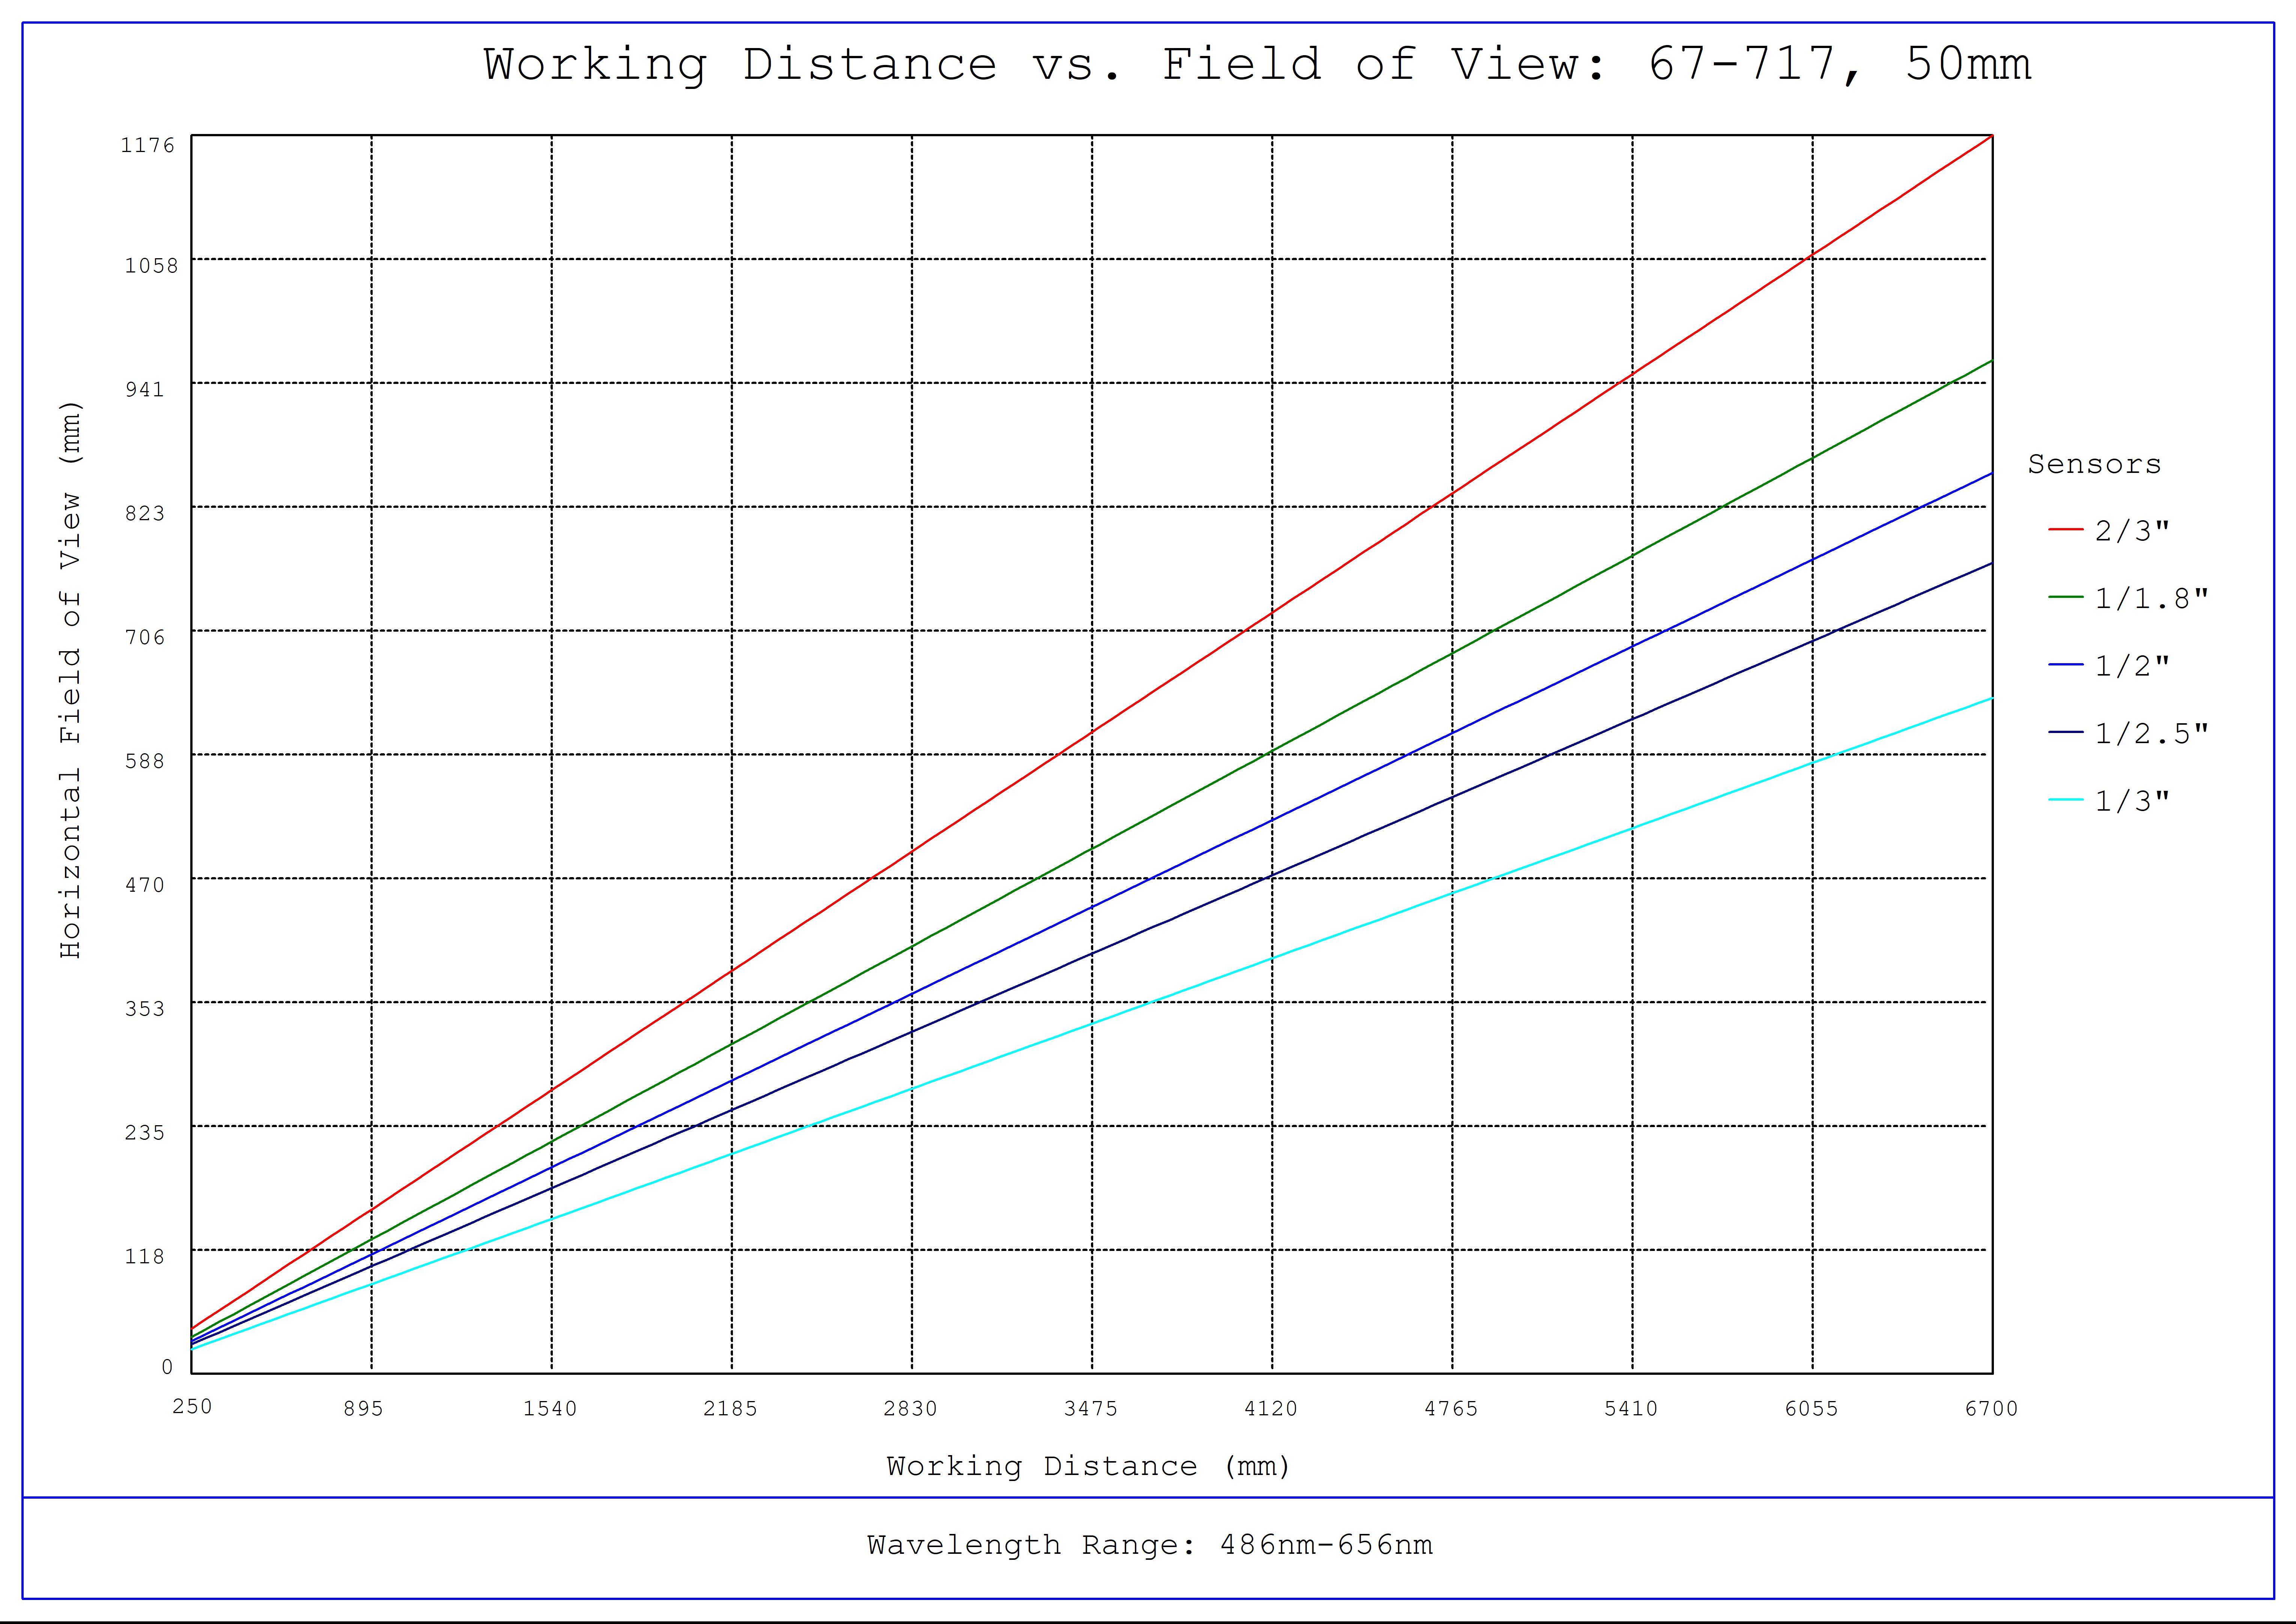 #67-717, 50mm C VIS-NIR Series Fixed Focal Length Lens, Working Distance versus Field of View Plot